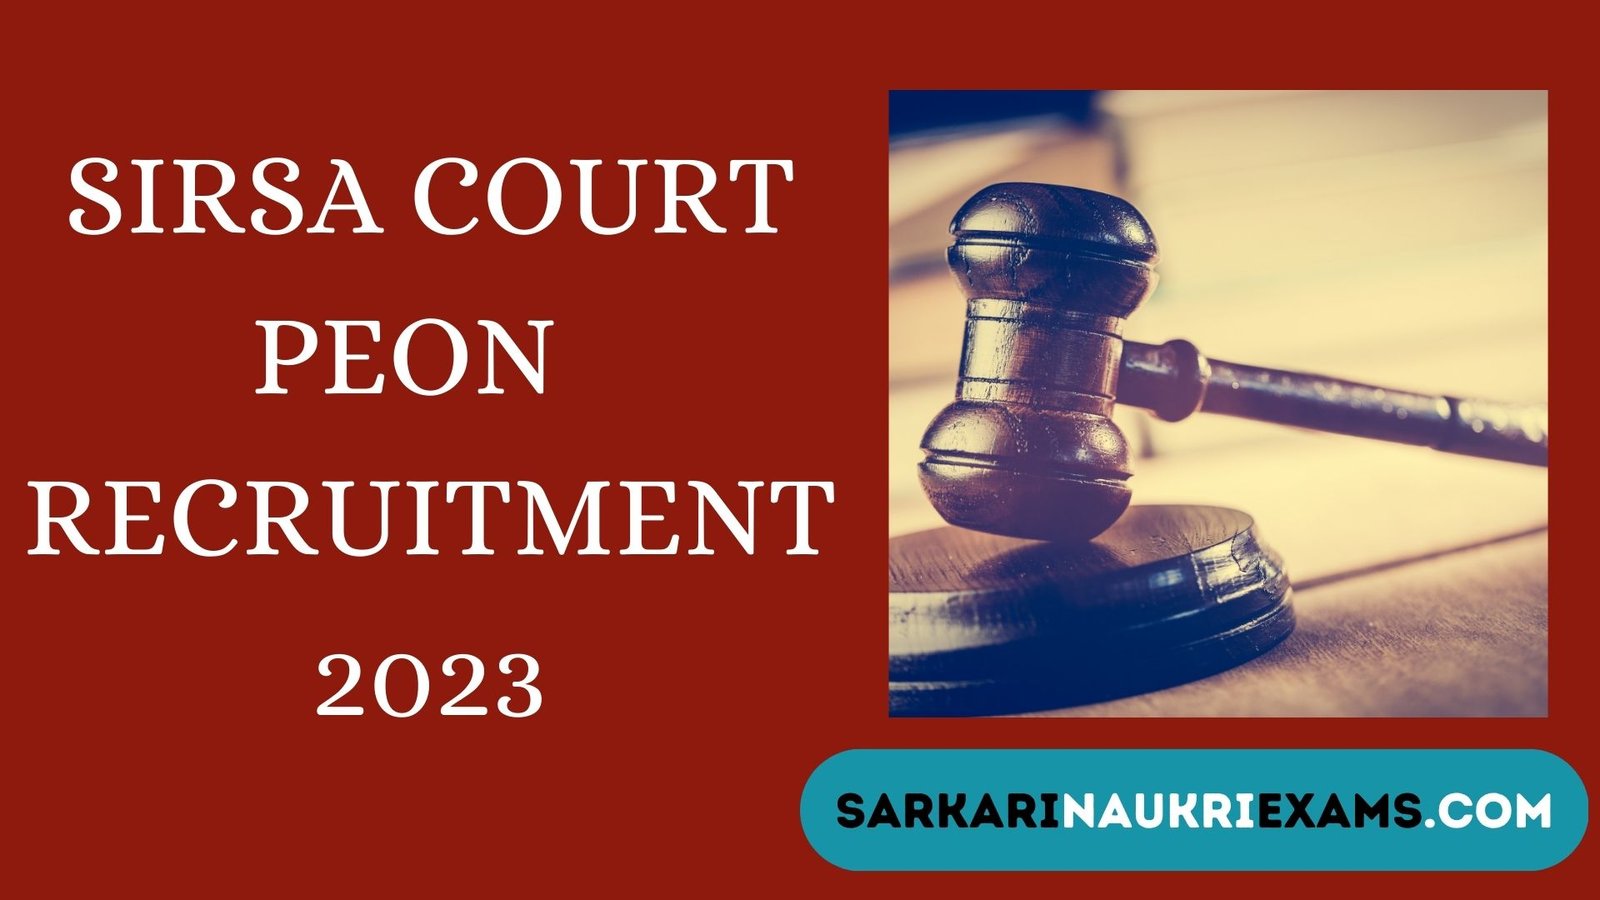 Sirsa Court Peon Recruitment 2023 | 10 Post Vacancy Apply Online